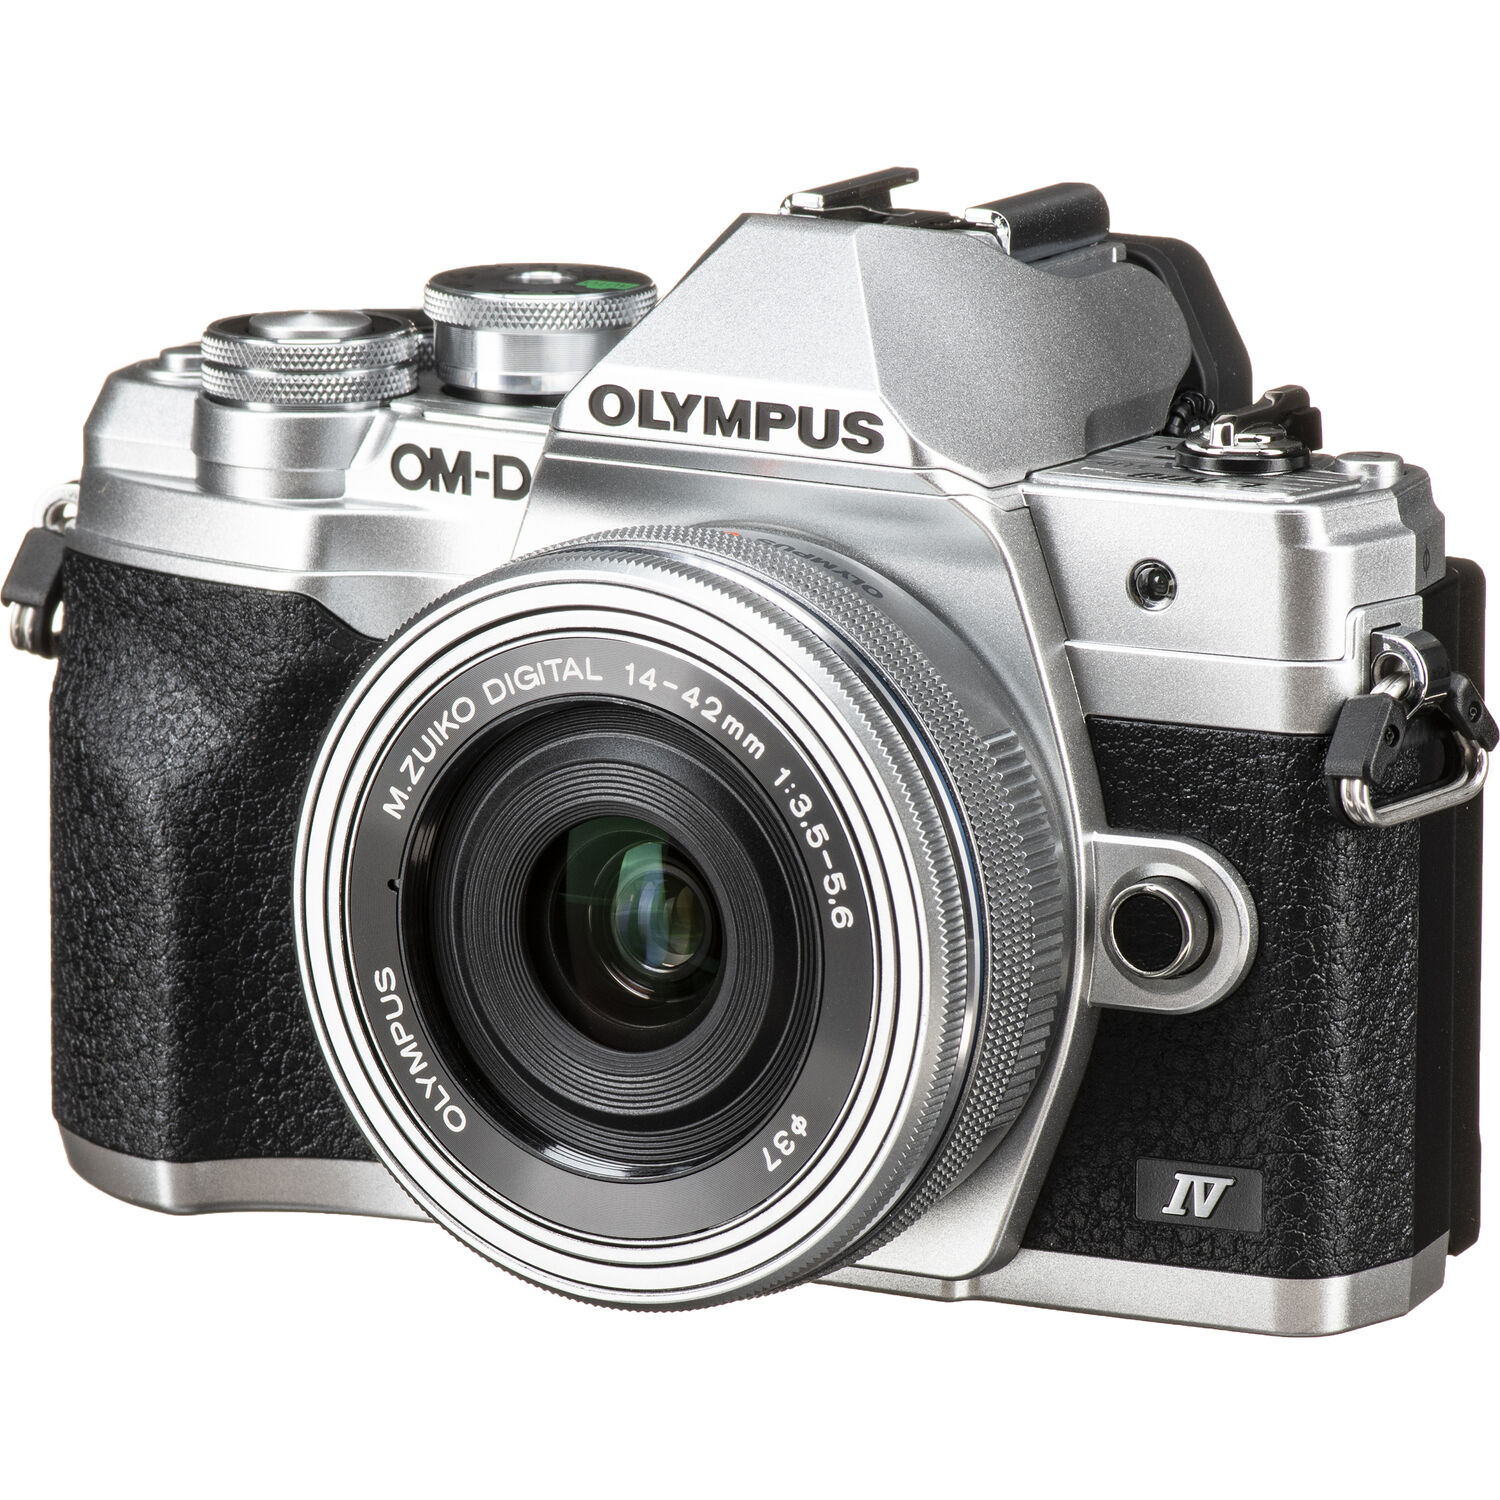 Olympus OM-D E-M10 Mark IV Camera with 14-42mm EZ Lens Kit (Silver)